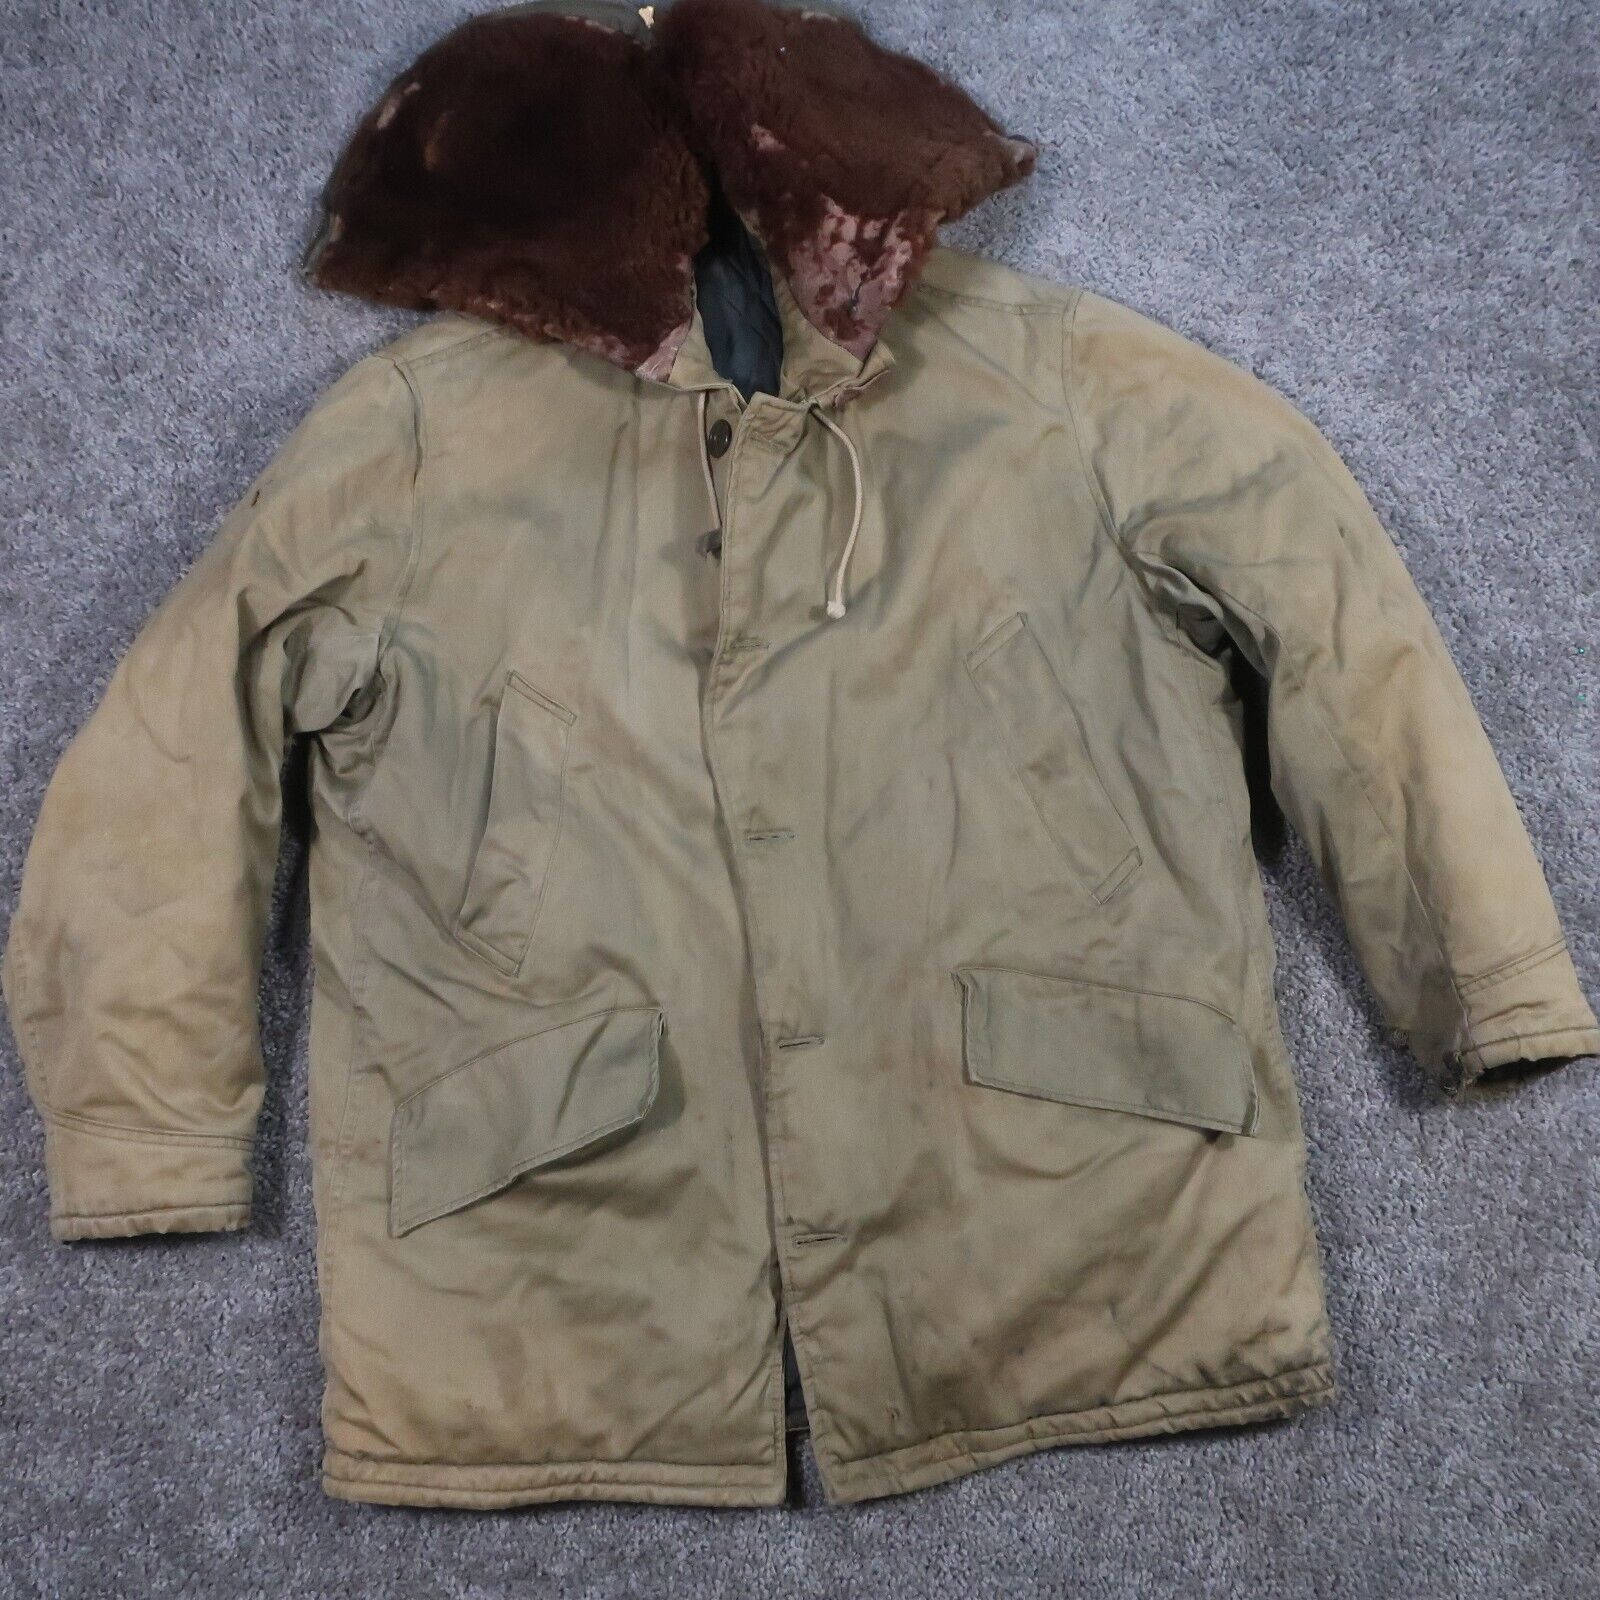 Vintage WWII USAF B-9 Parka Cold Weather Coat Jacket US Military Distressed